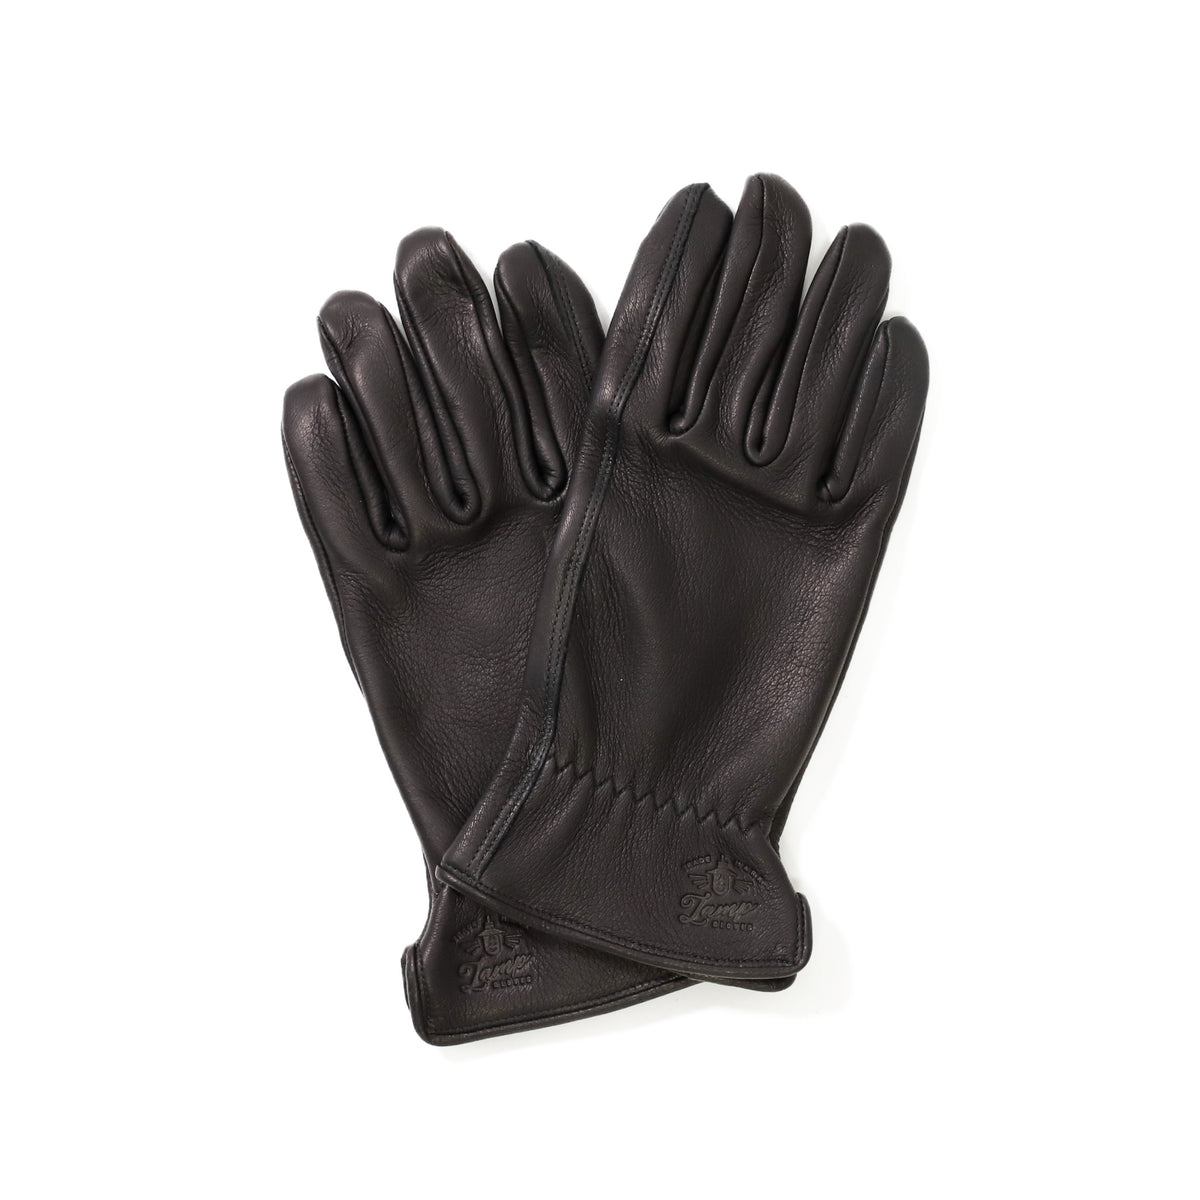 Utility glove Standard- Black - Lamp gloves